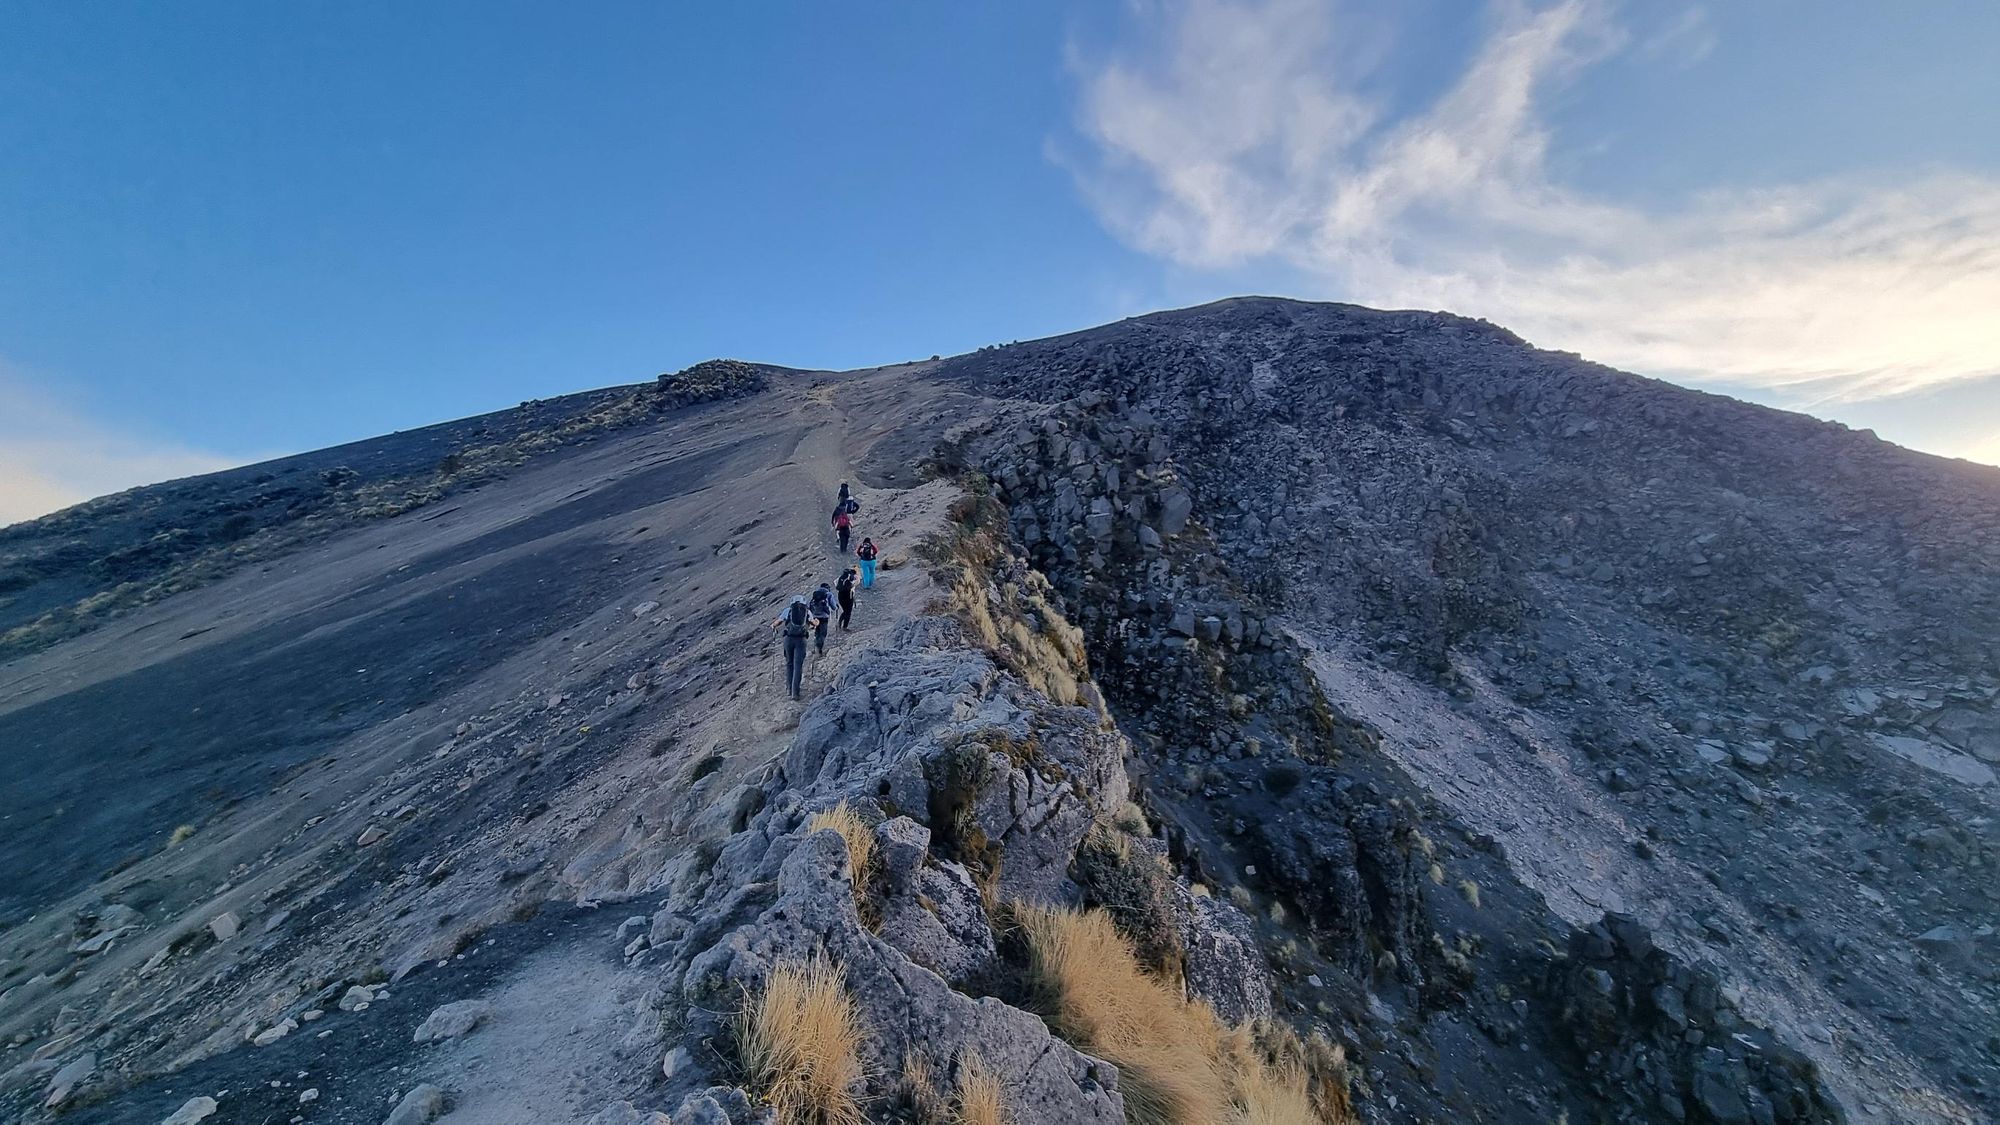 Hikers climb up to Acatenango summit